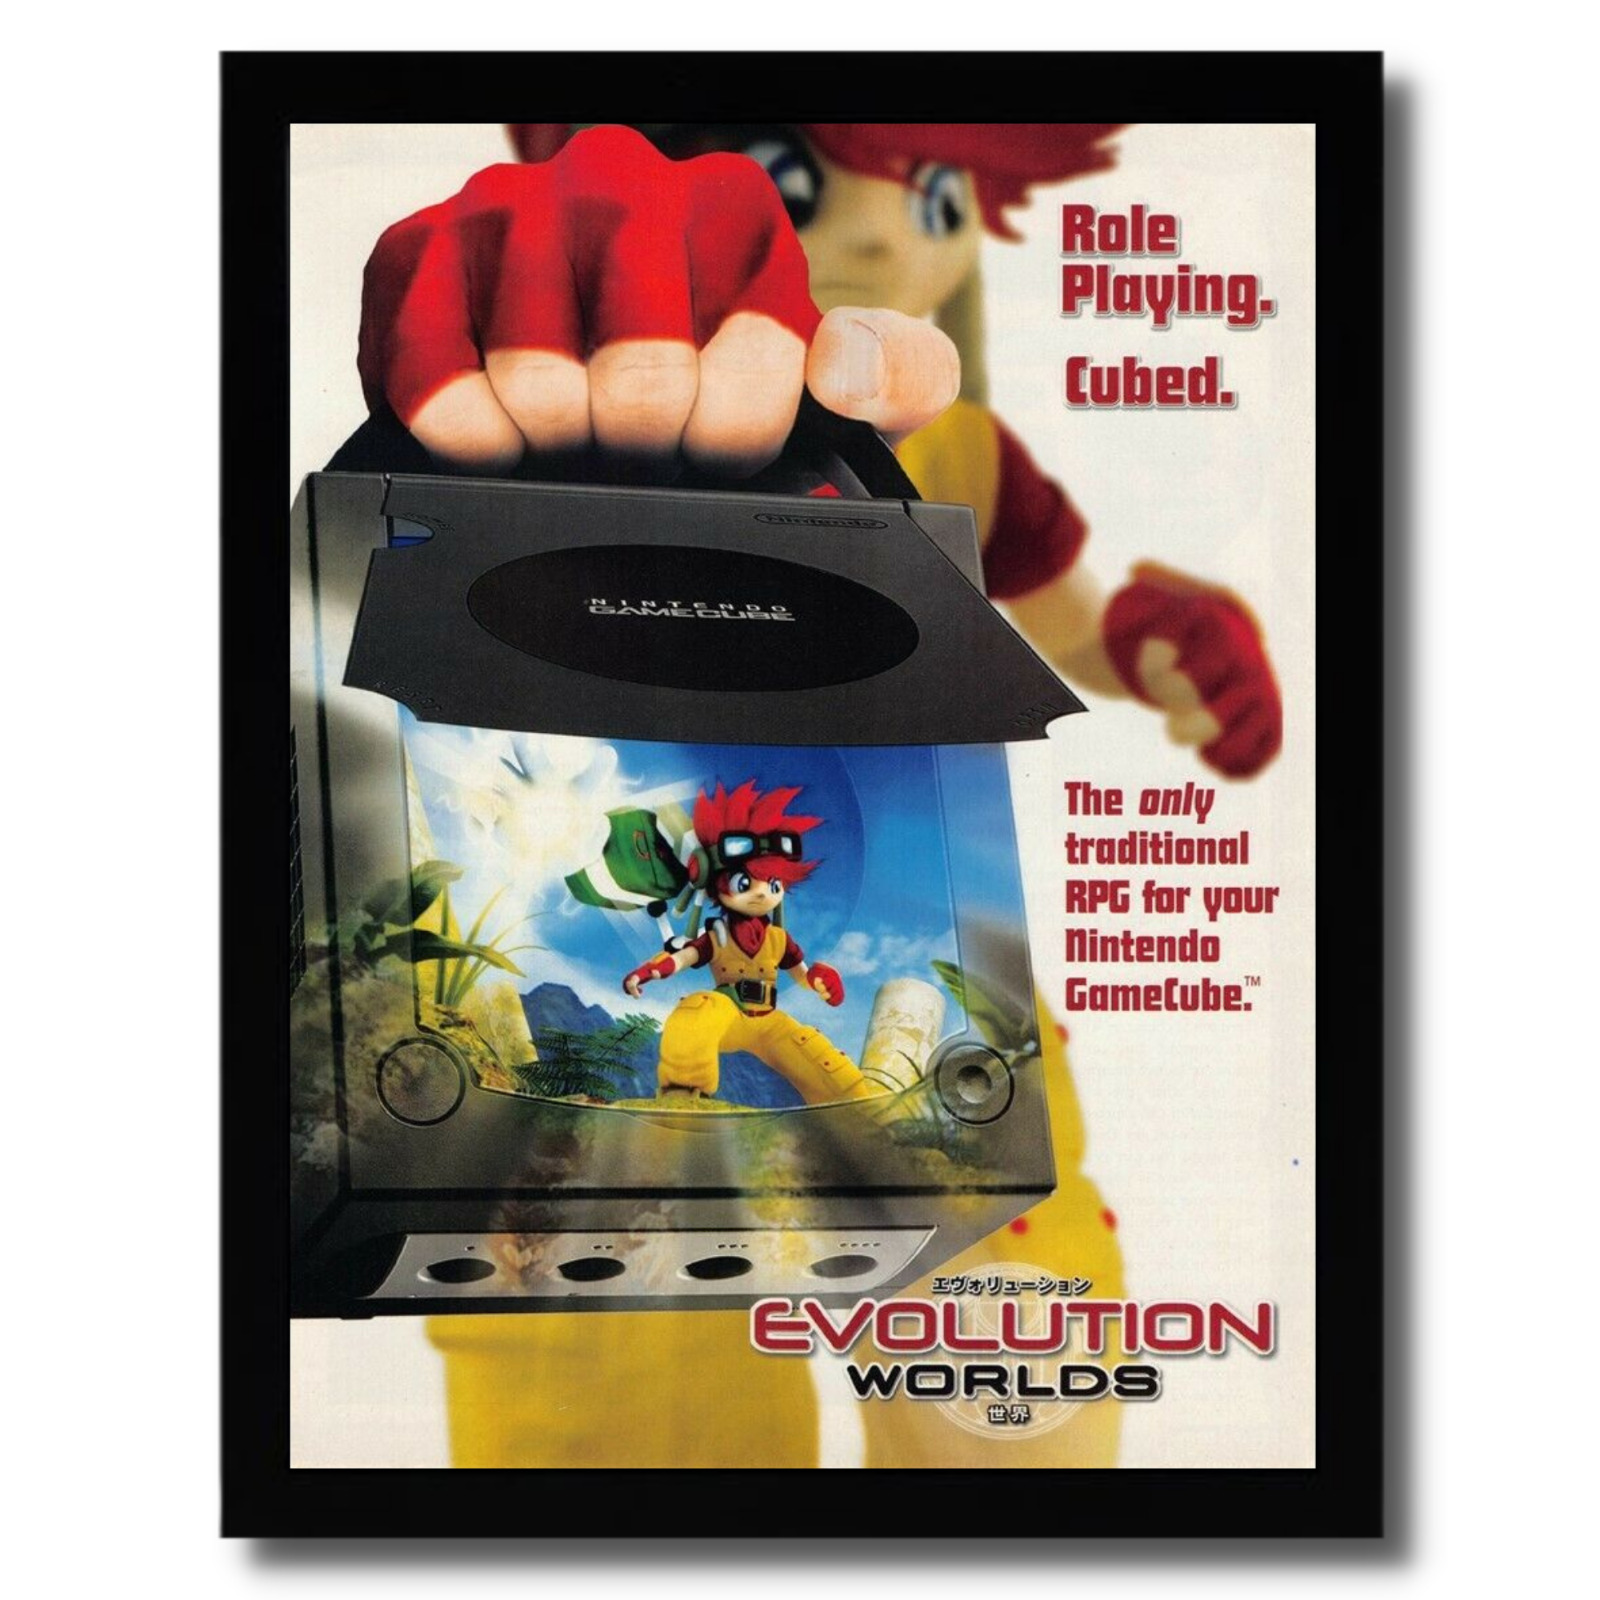 2002 Evolution Worlds Framed Print Ad/Poster Original Authentic Gamecube Art